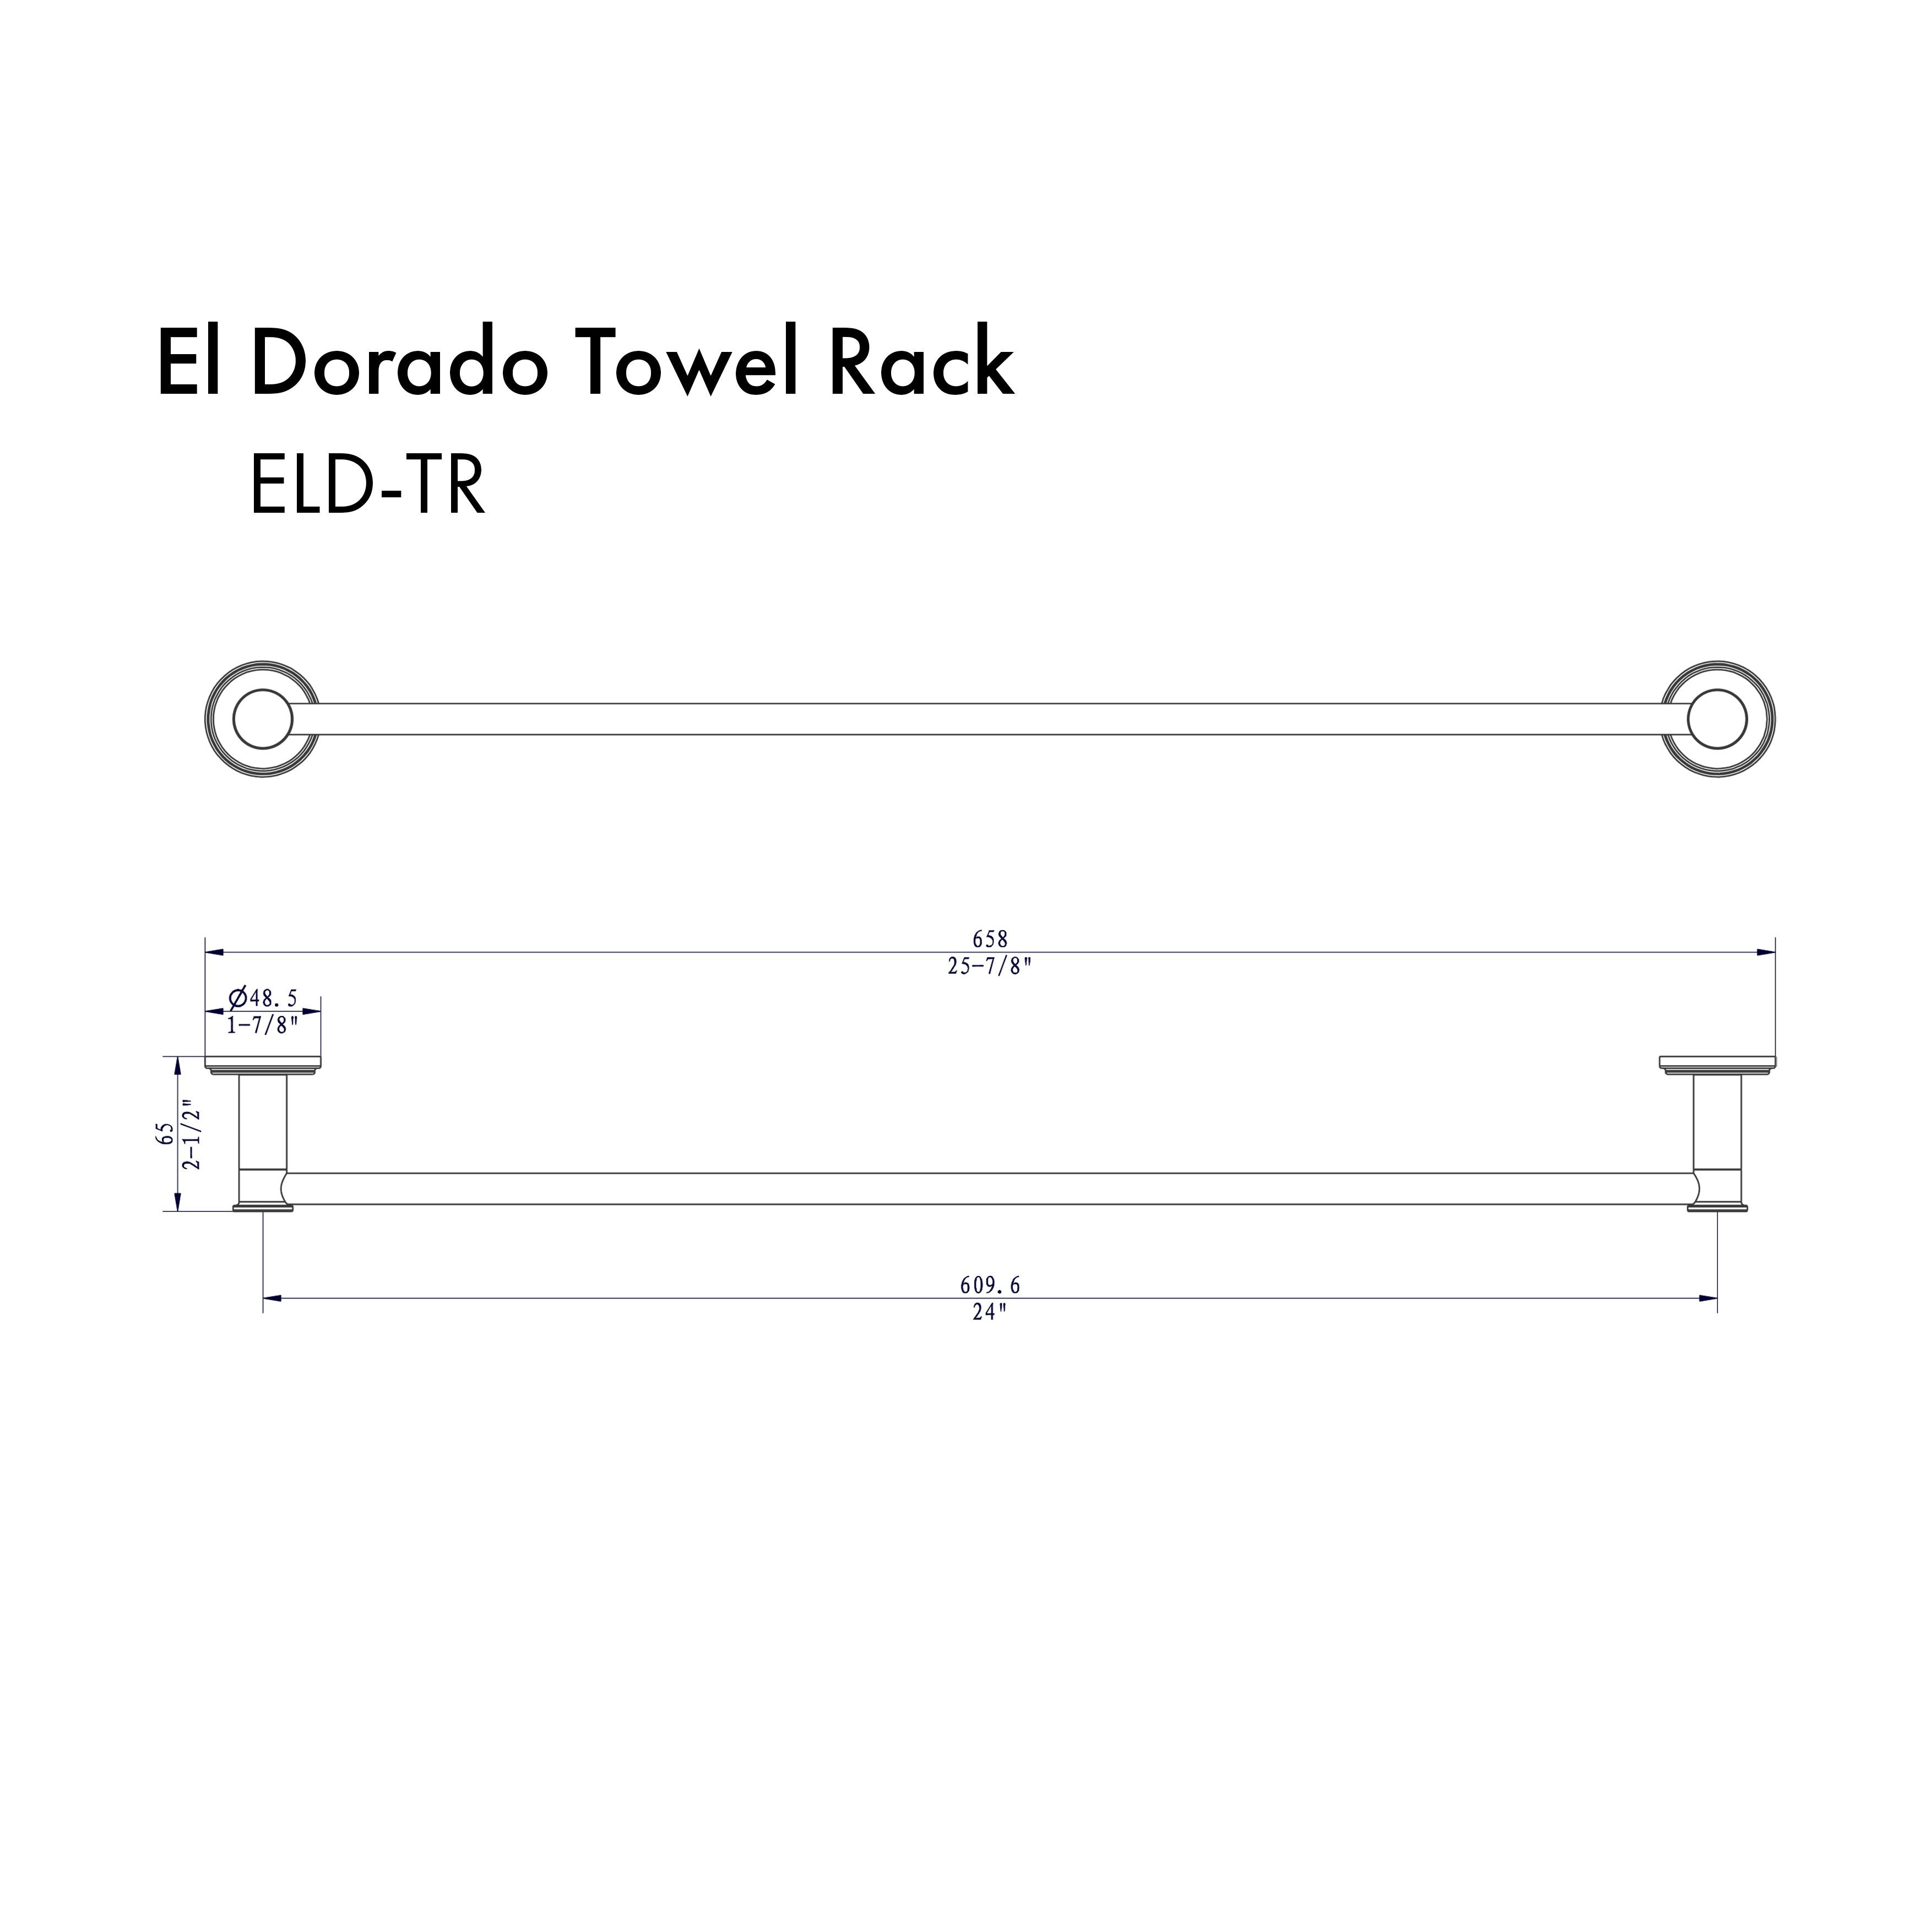 Therangehoodstore.com, ZLINE El Dorado Towel Rail with color options (ELD-TR), ELD-TR-BN,